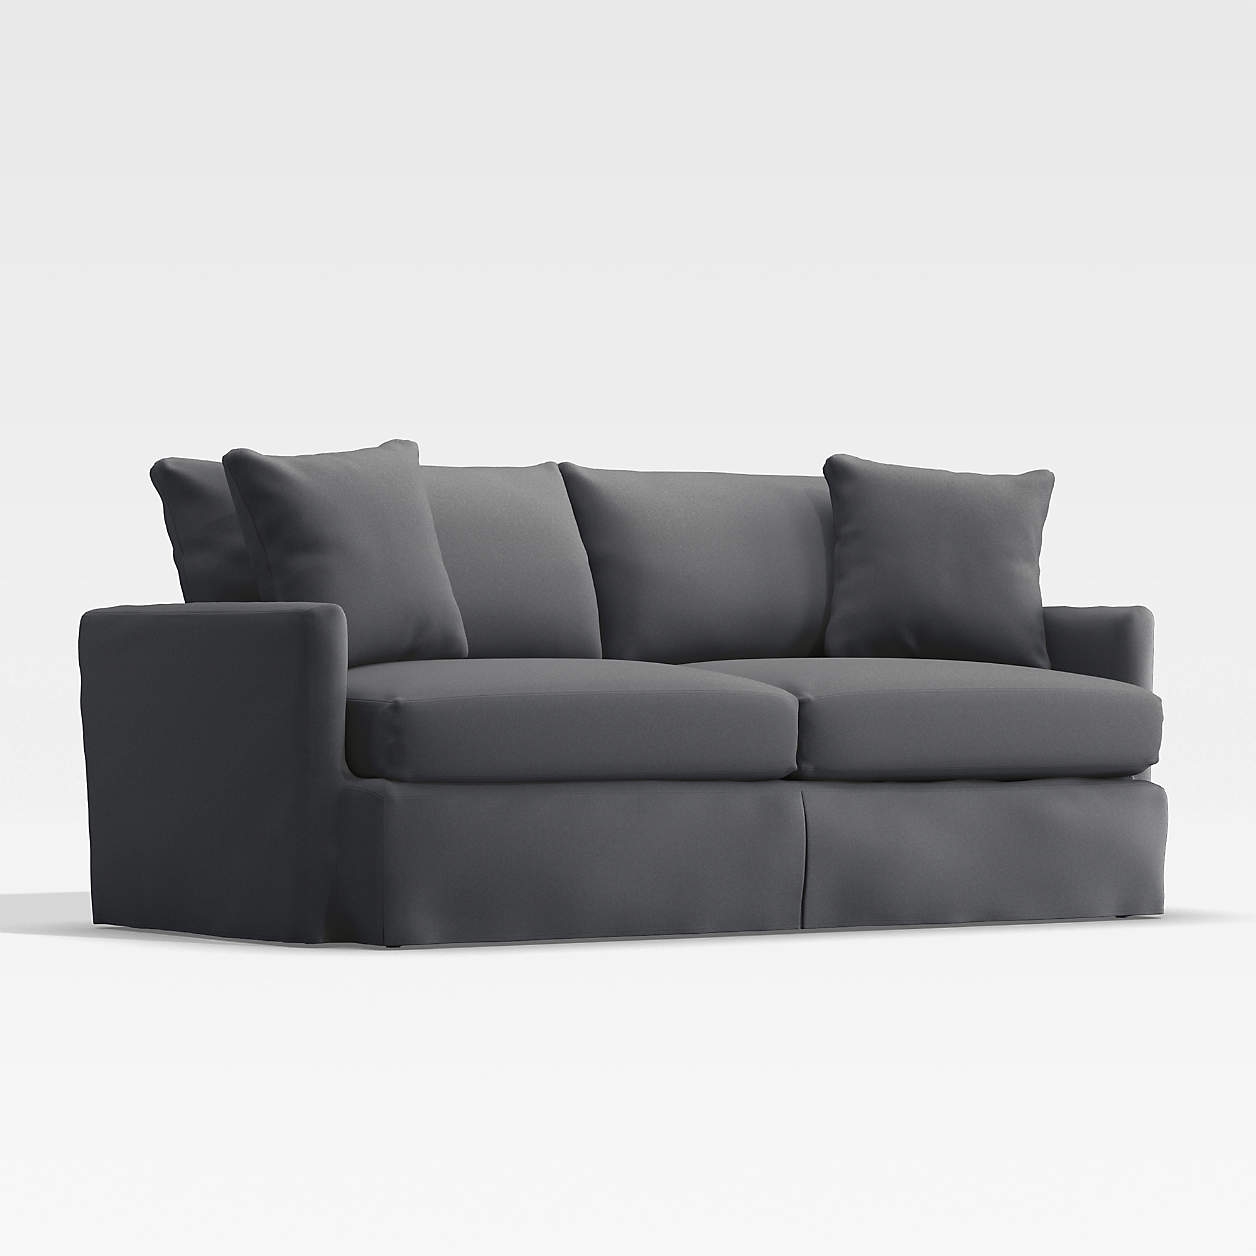 Lounge Outdoor Slipcovered Sofa 83" - Image 1